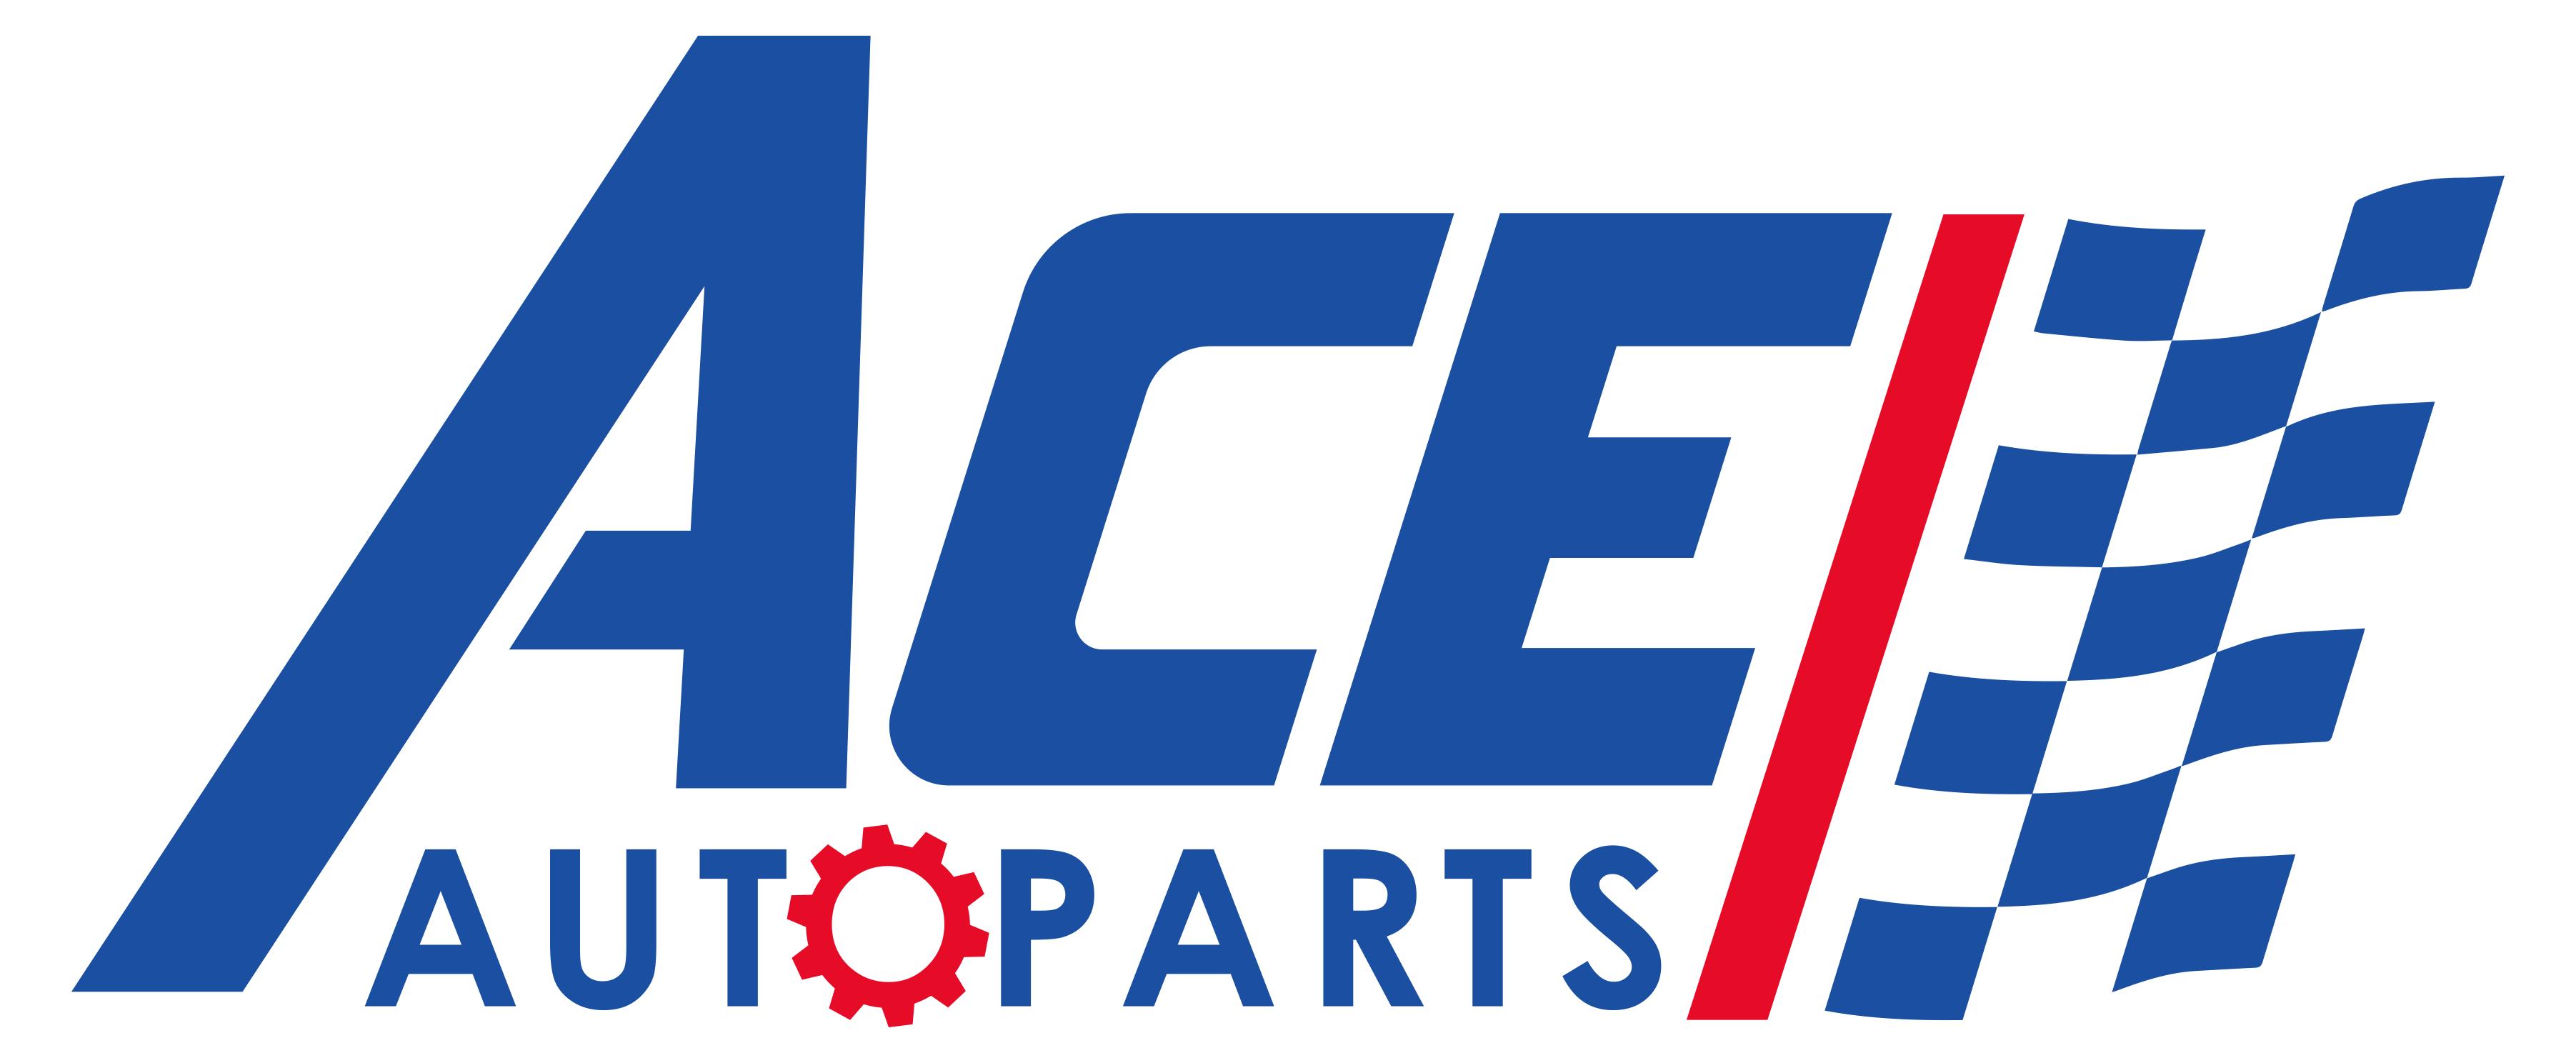 Ace Autoparts Limited